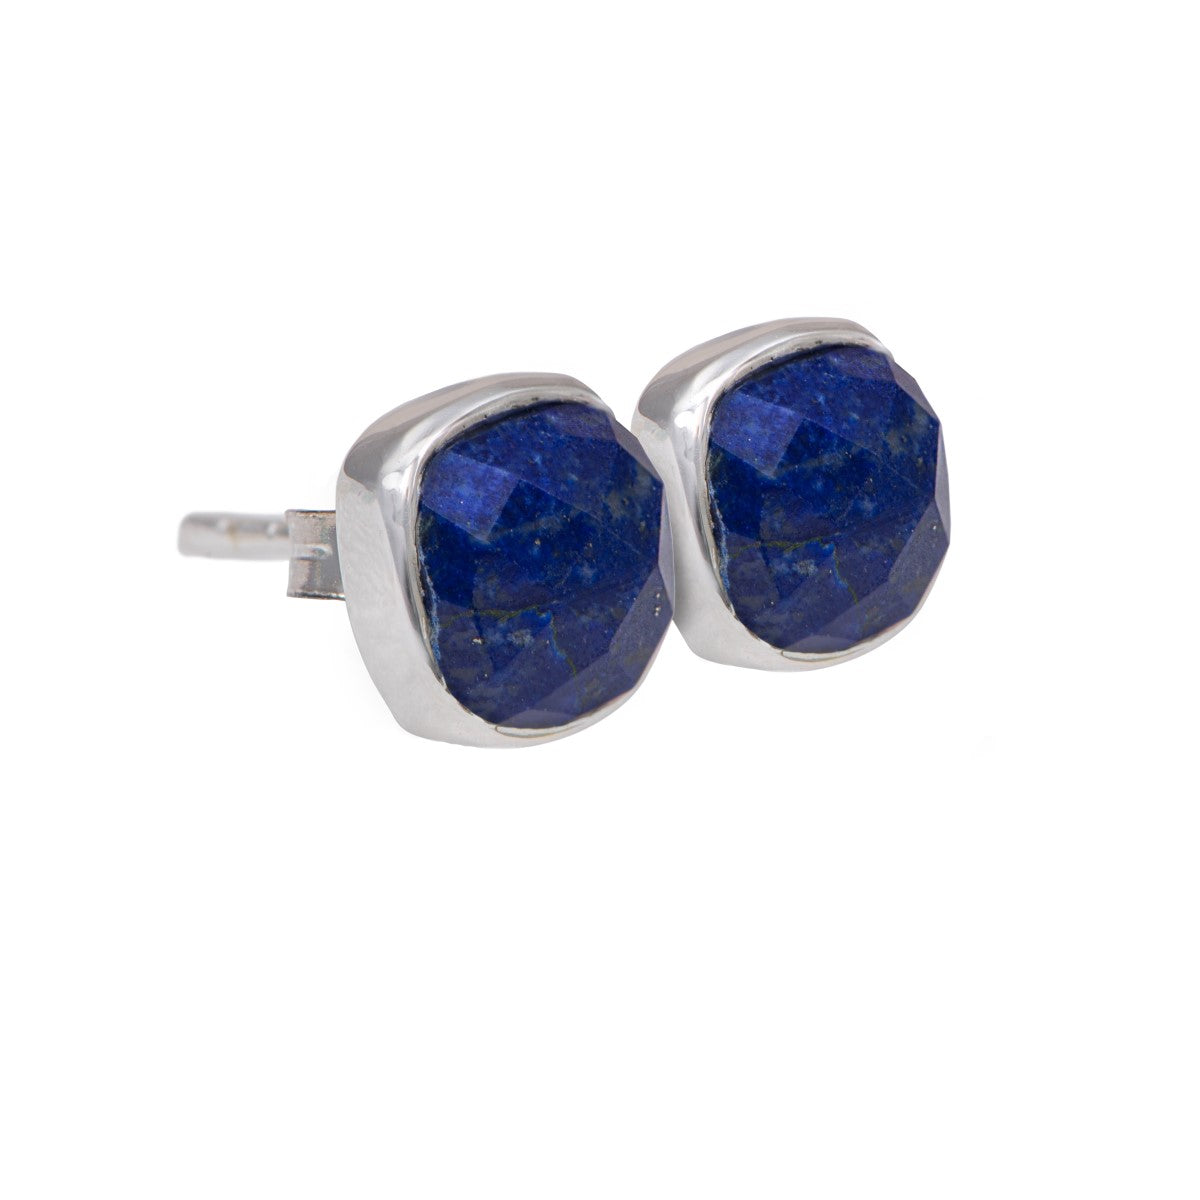 Faceted Square Lapiz Lazuli Gemstone Stud Earrings in Sterling Silver